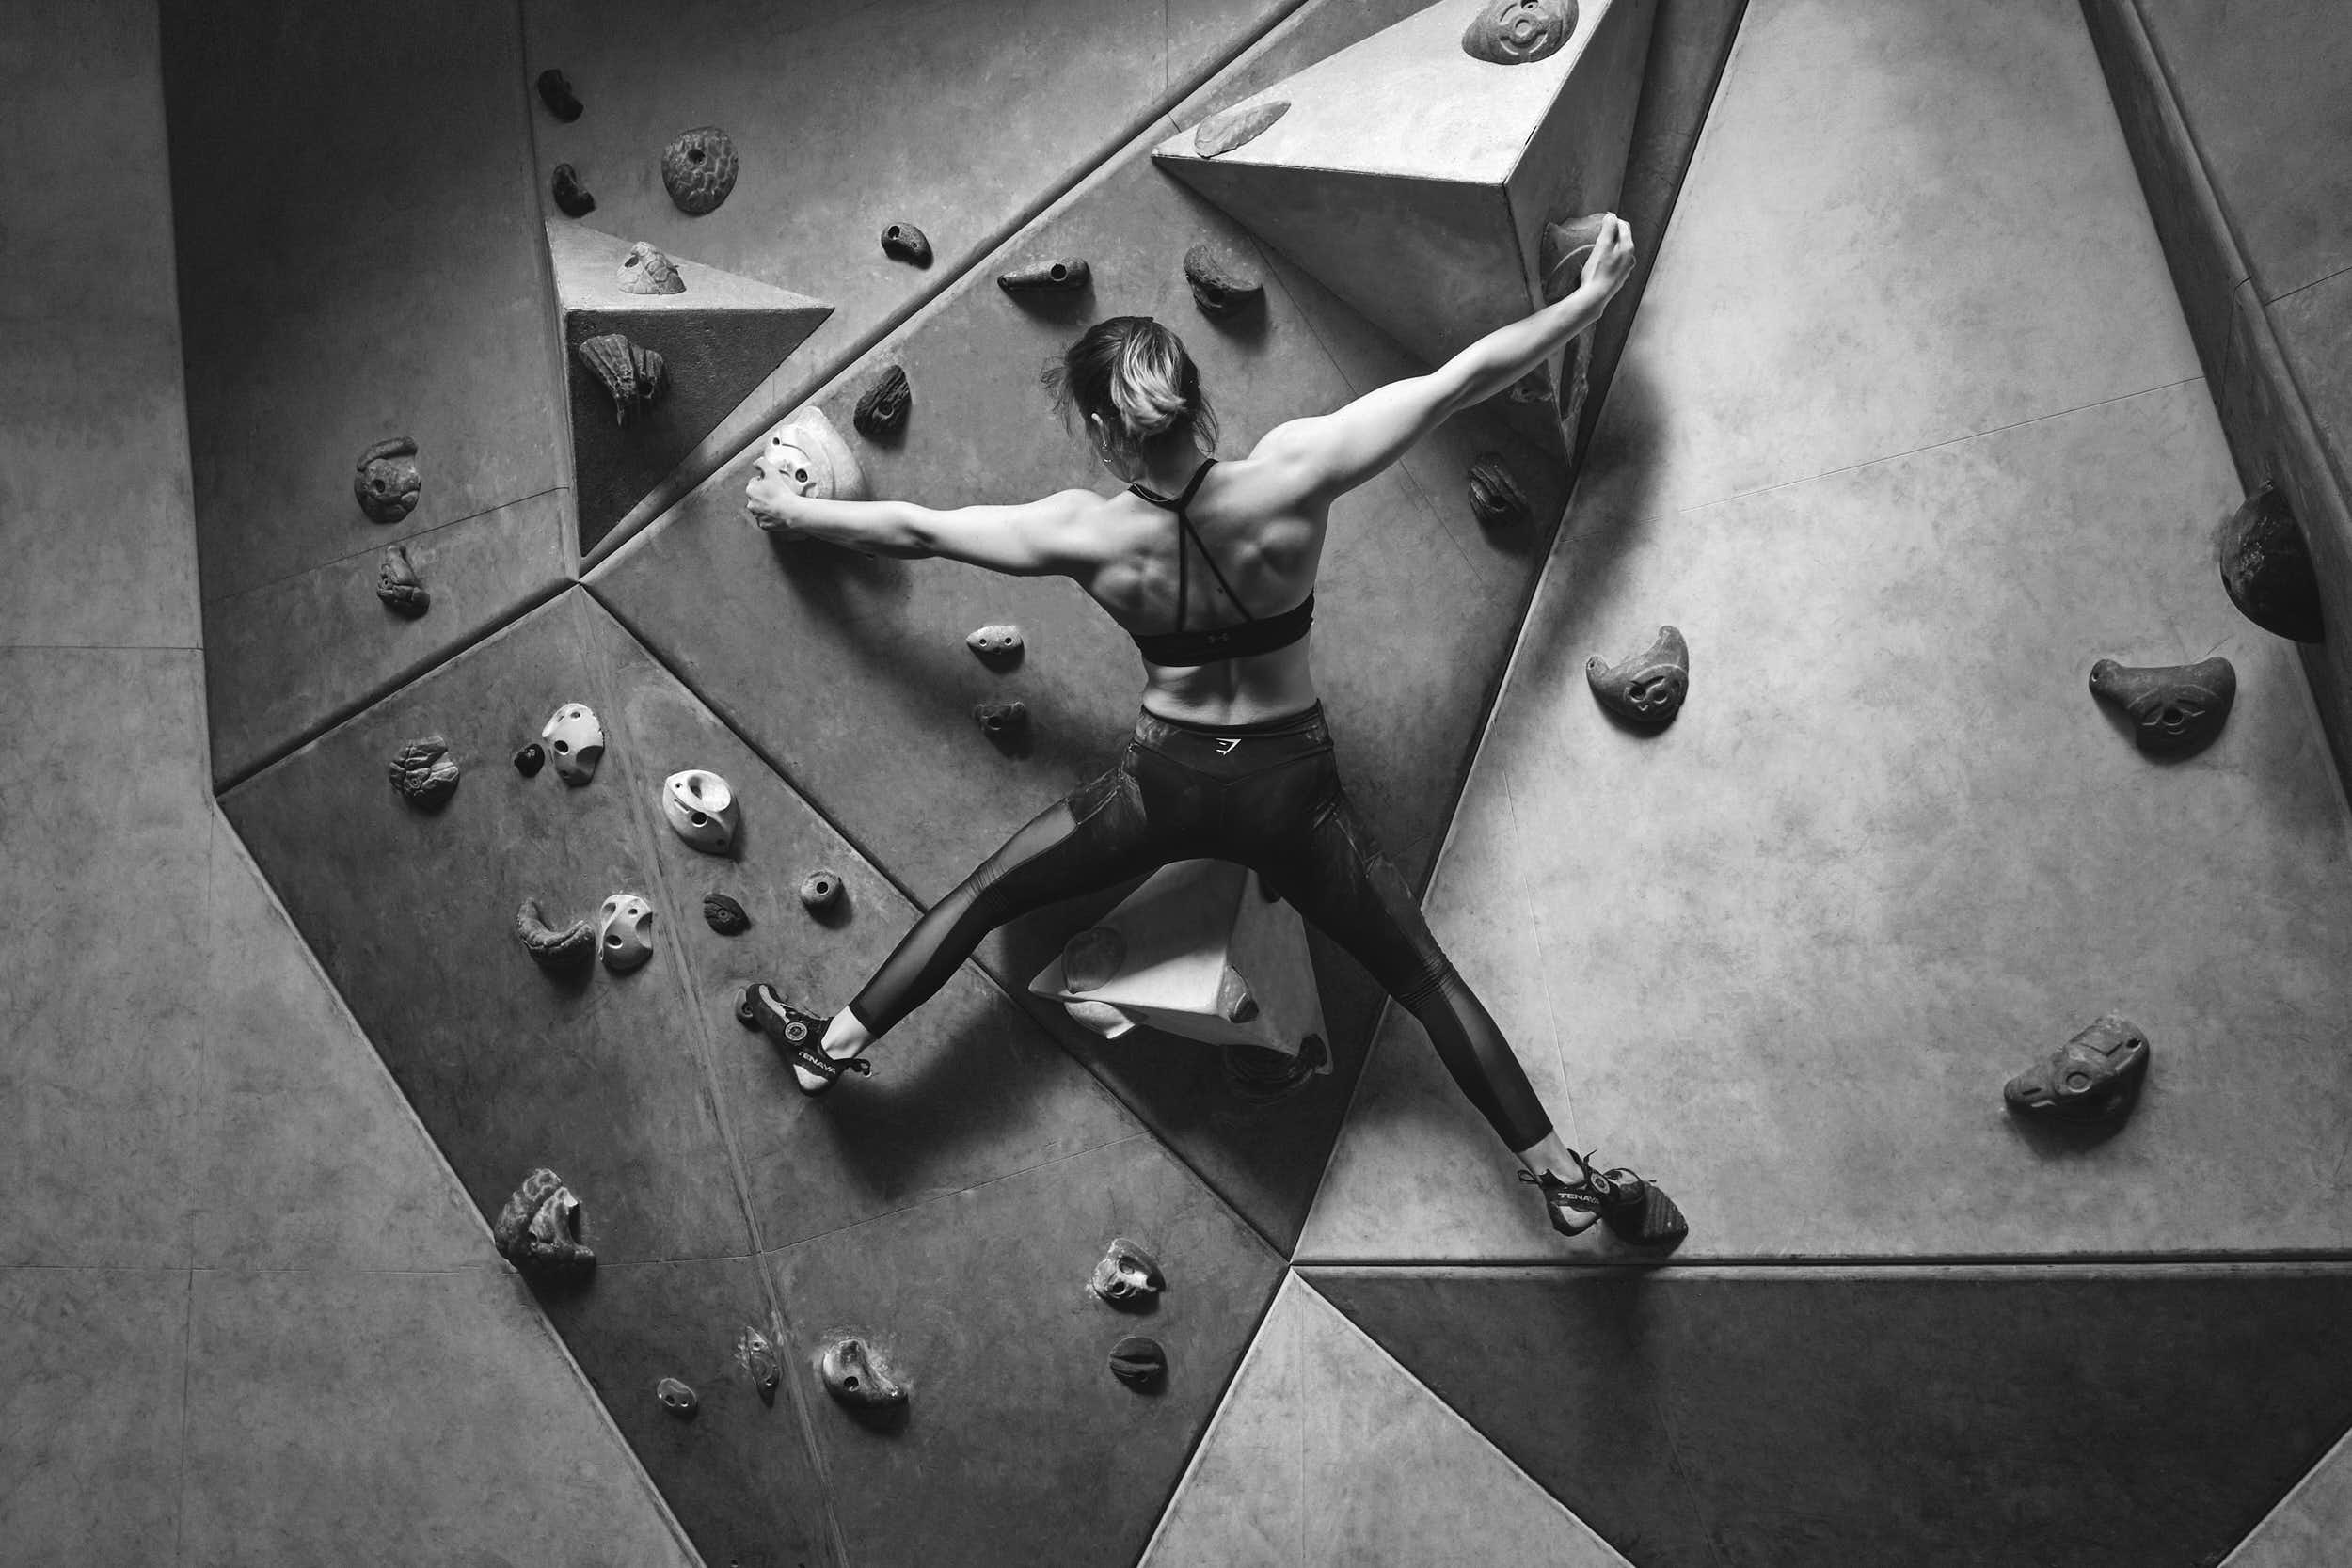 BA Photography work by Tadas Kirtiklis showing an action image of a rock-climber on an indoor climbing wall